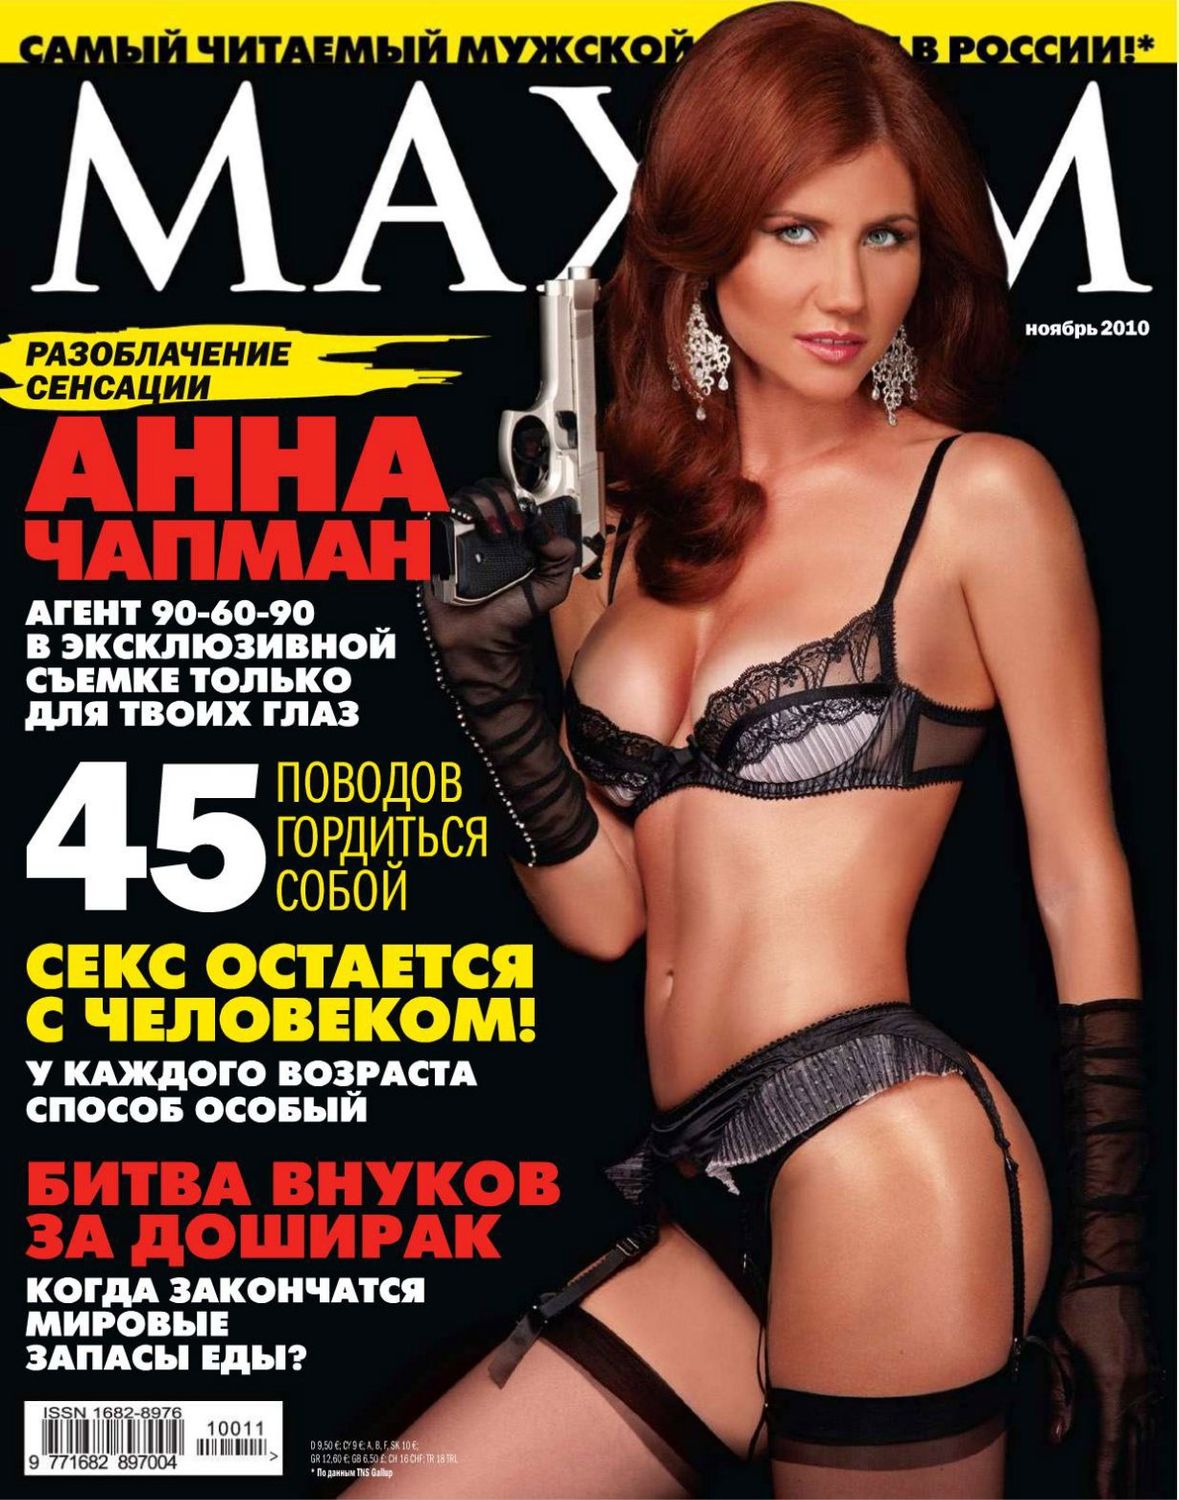 Anna Chapman hot Russian Spy in Maxim Magazine